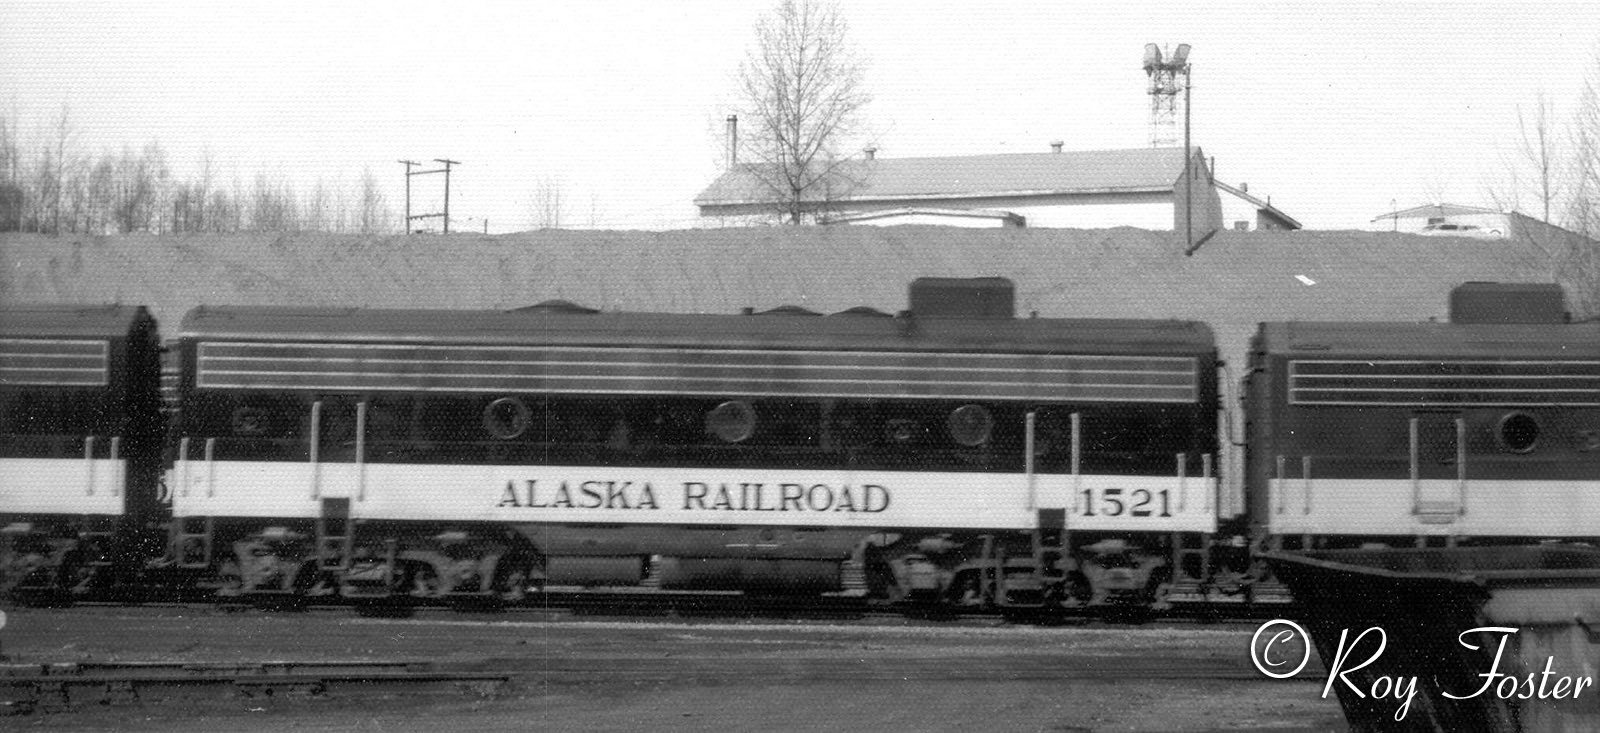 ARR 1521, Anchorage, 4-29-74